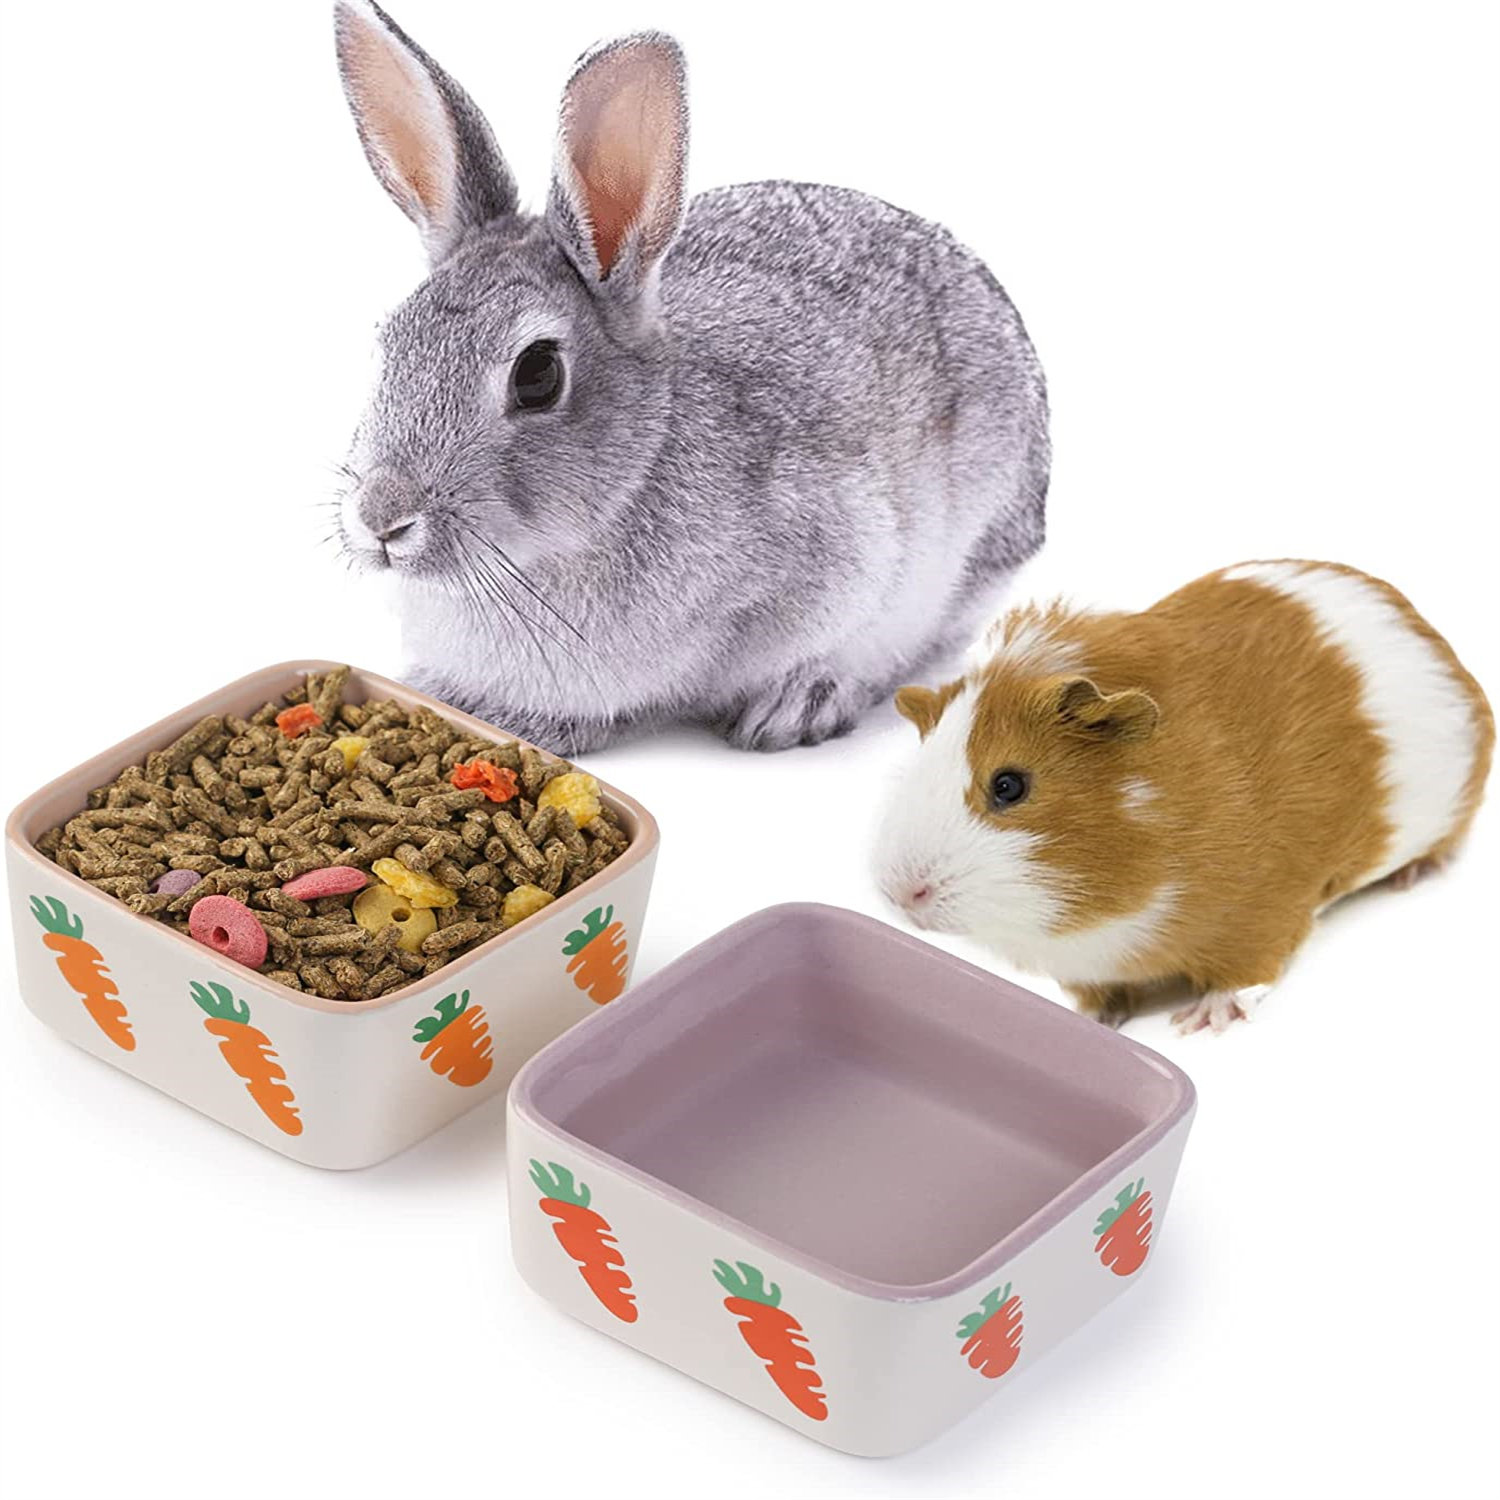 Pet Ceramic Feeding Bowl Dish Food Water Feeder For Small Hamster Rabbit Dog Cat 